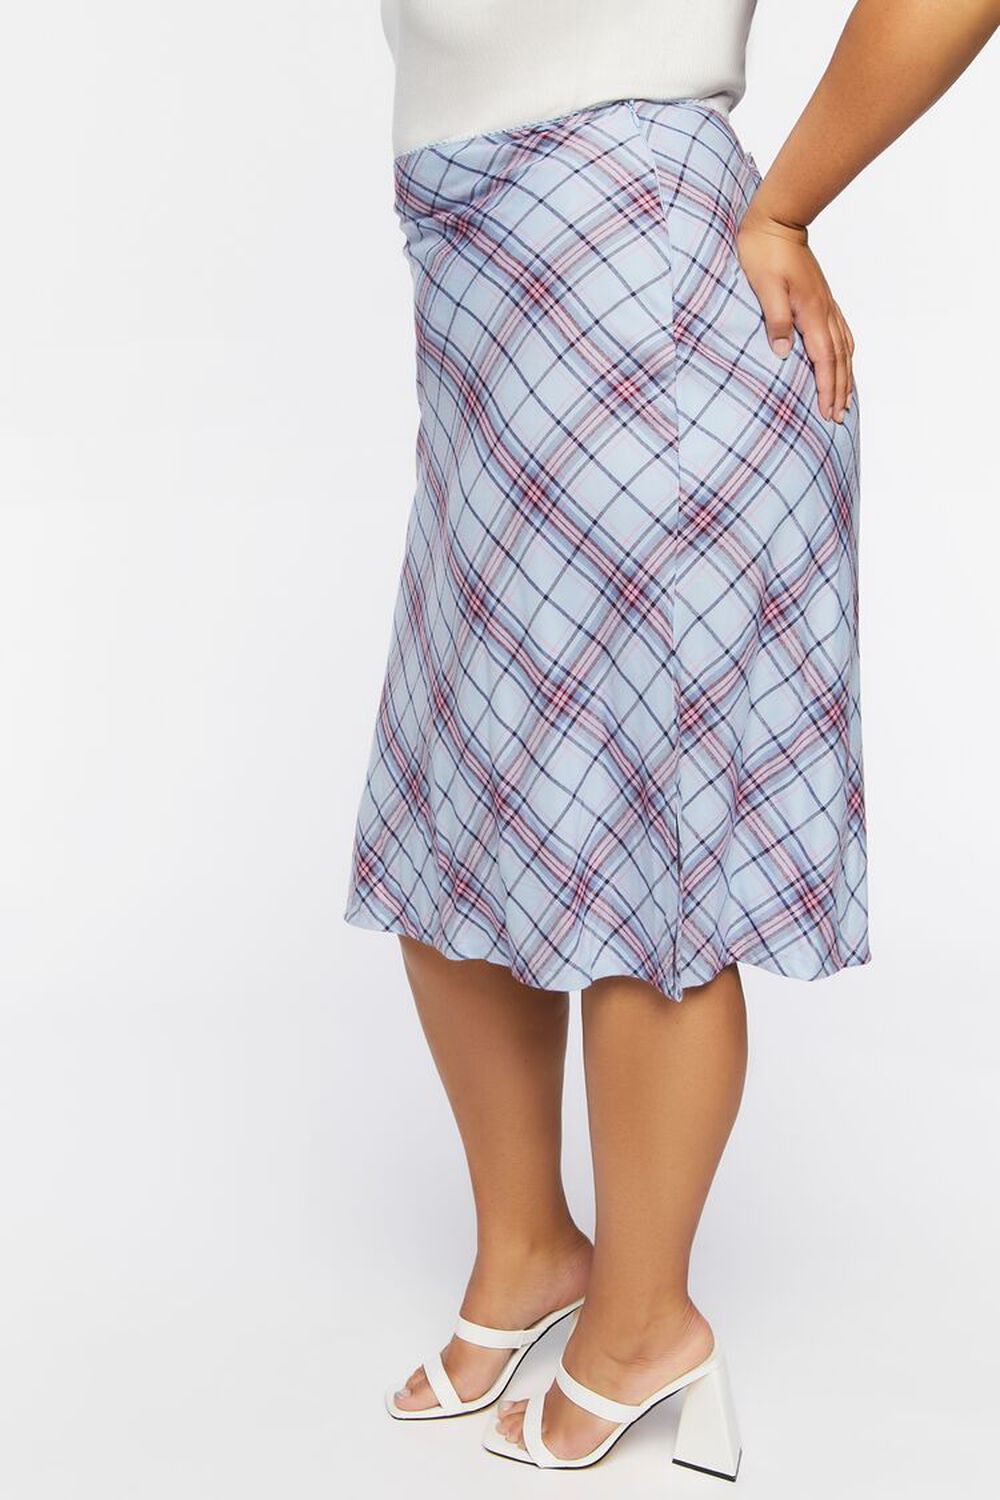 CLOUD/MULTI Plus Size Plaid A-Line Midi Skirt, image 3